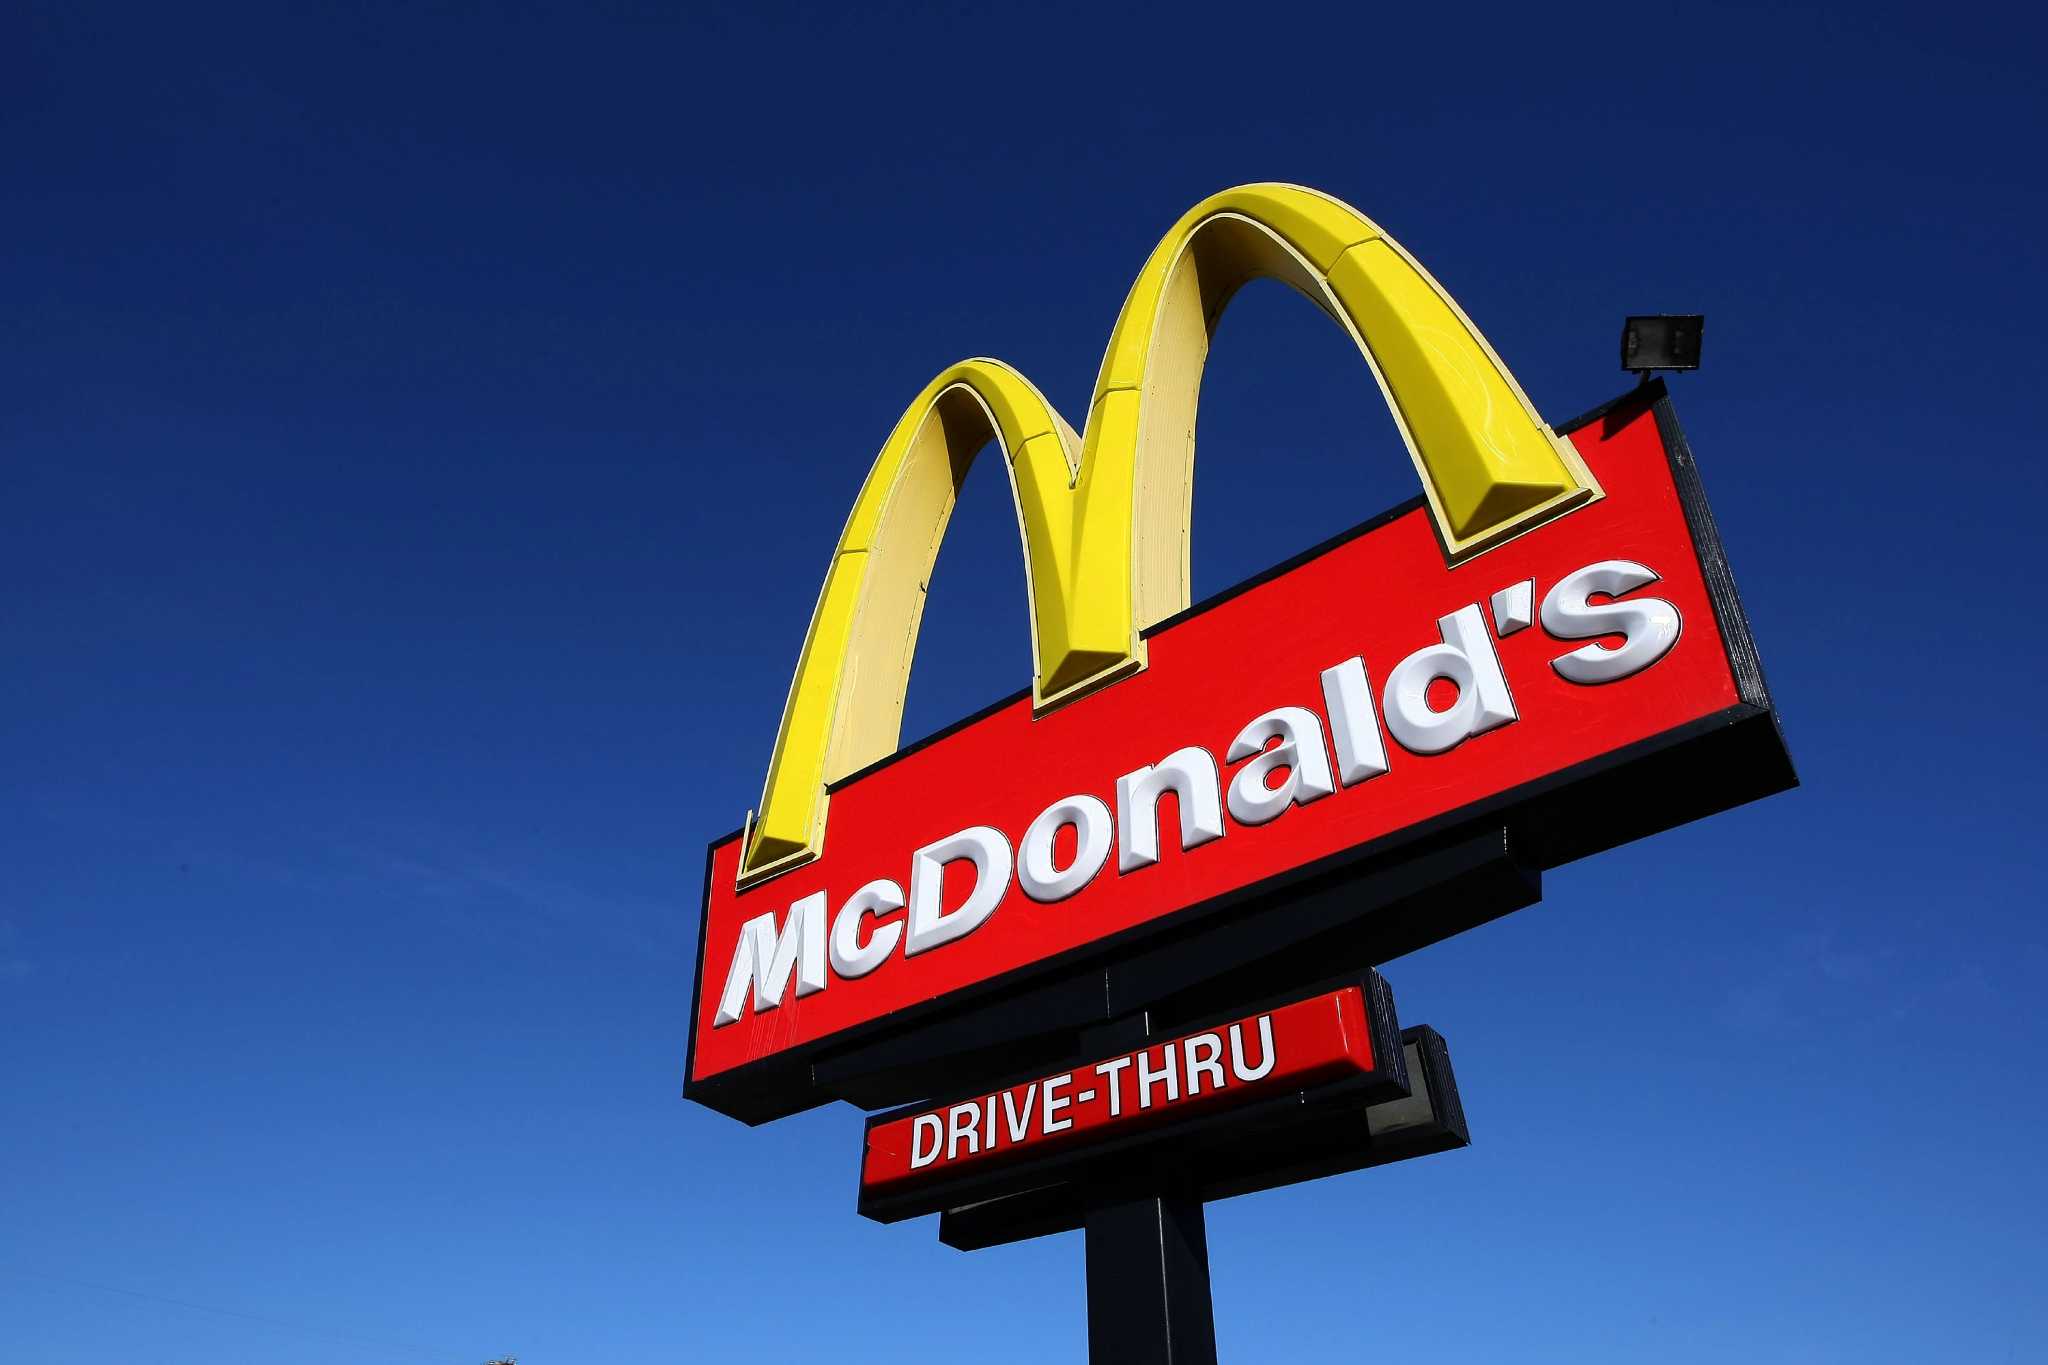 McDonald's offering free breakfast to teachers, students ahead of STAAR